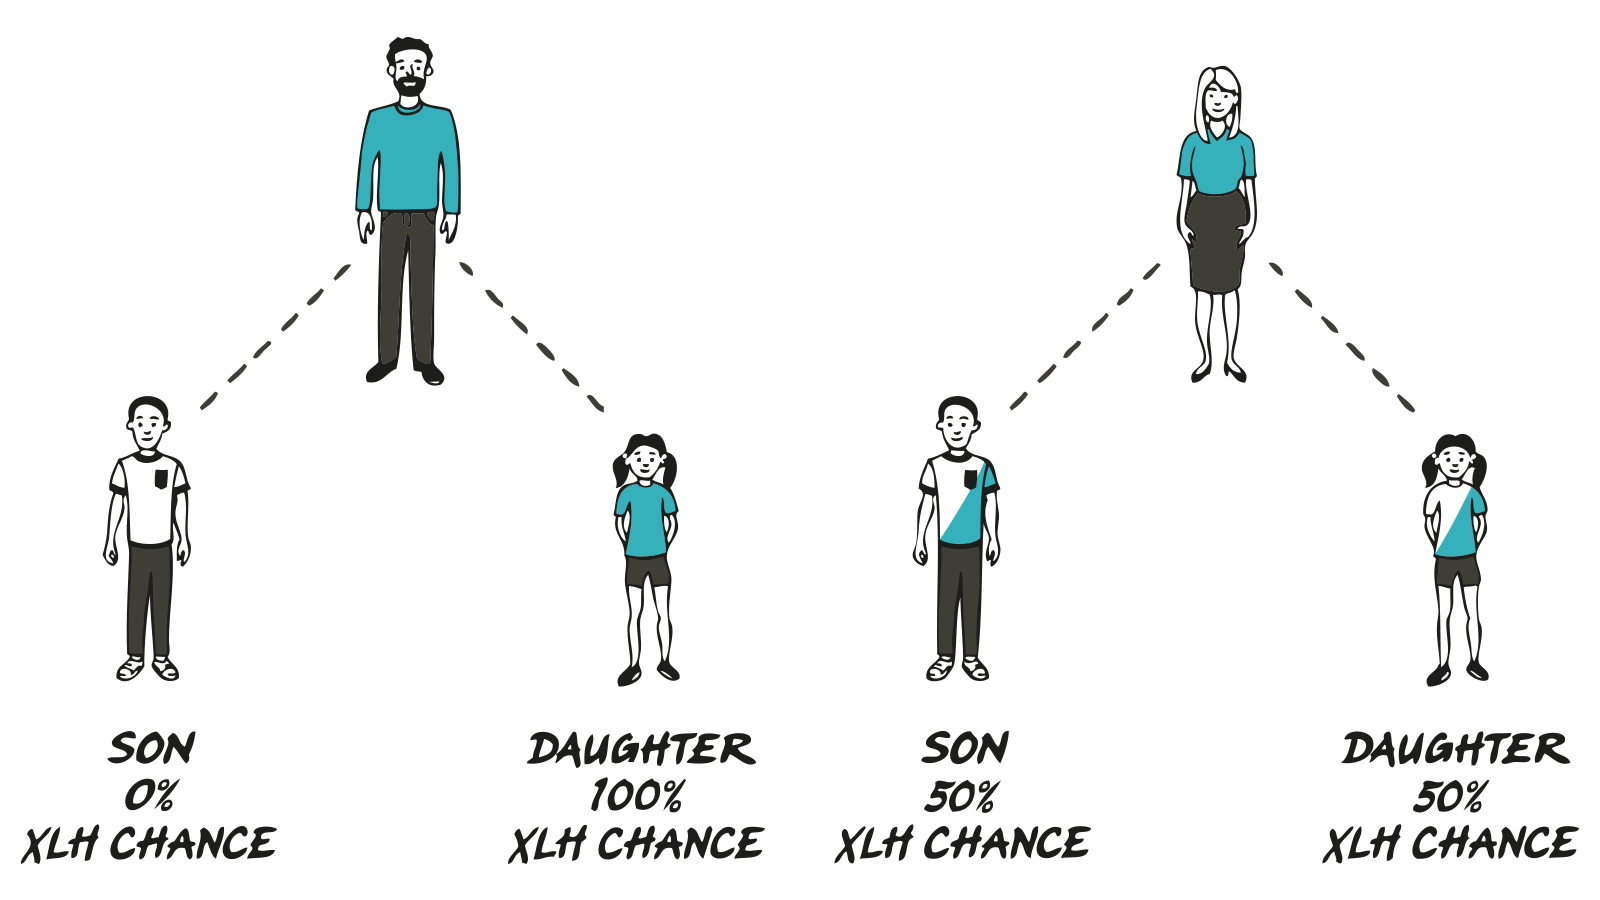 X- & Y-chromosome inheritance patterns of XLH